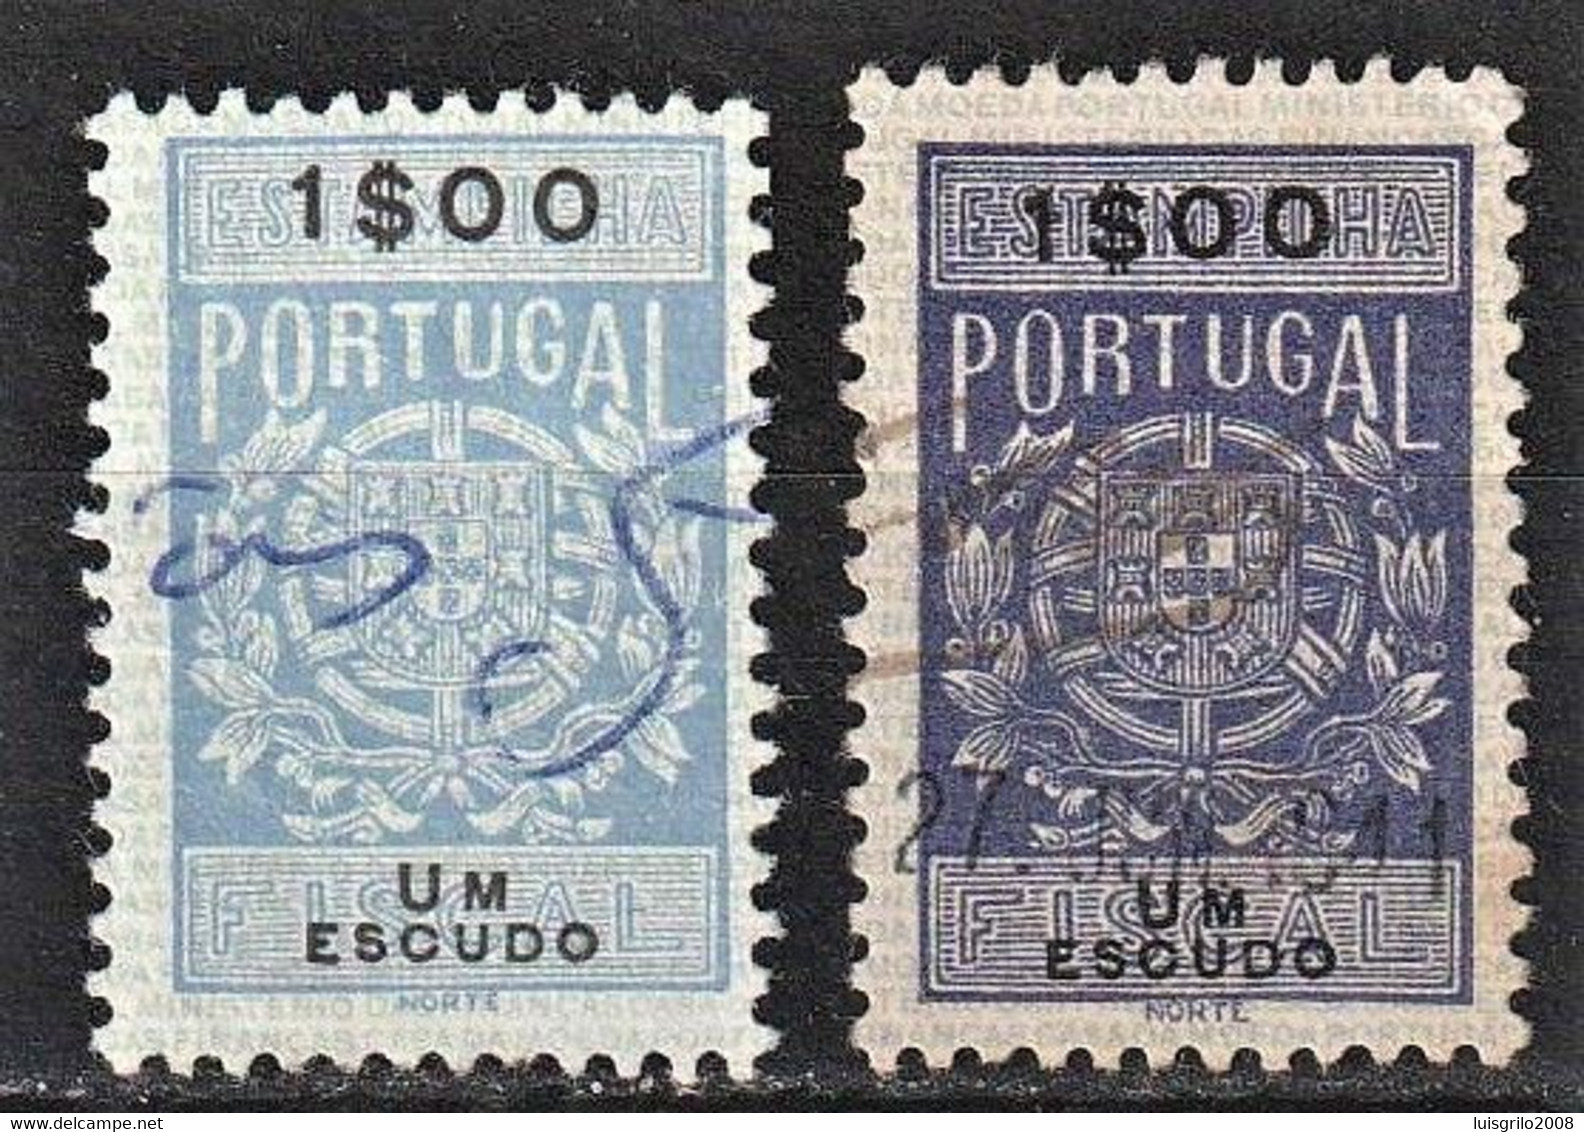 VERY RARE STAMP - Fiscal/ Revenue, Portugal 1940 - Estampilha Fiscal -|- 1$00 - DIFFERENT COLOR - Gebruikt